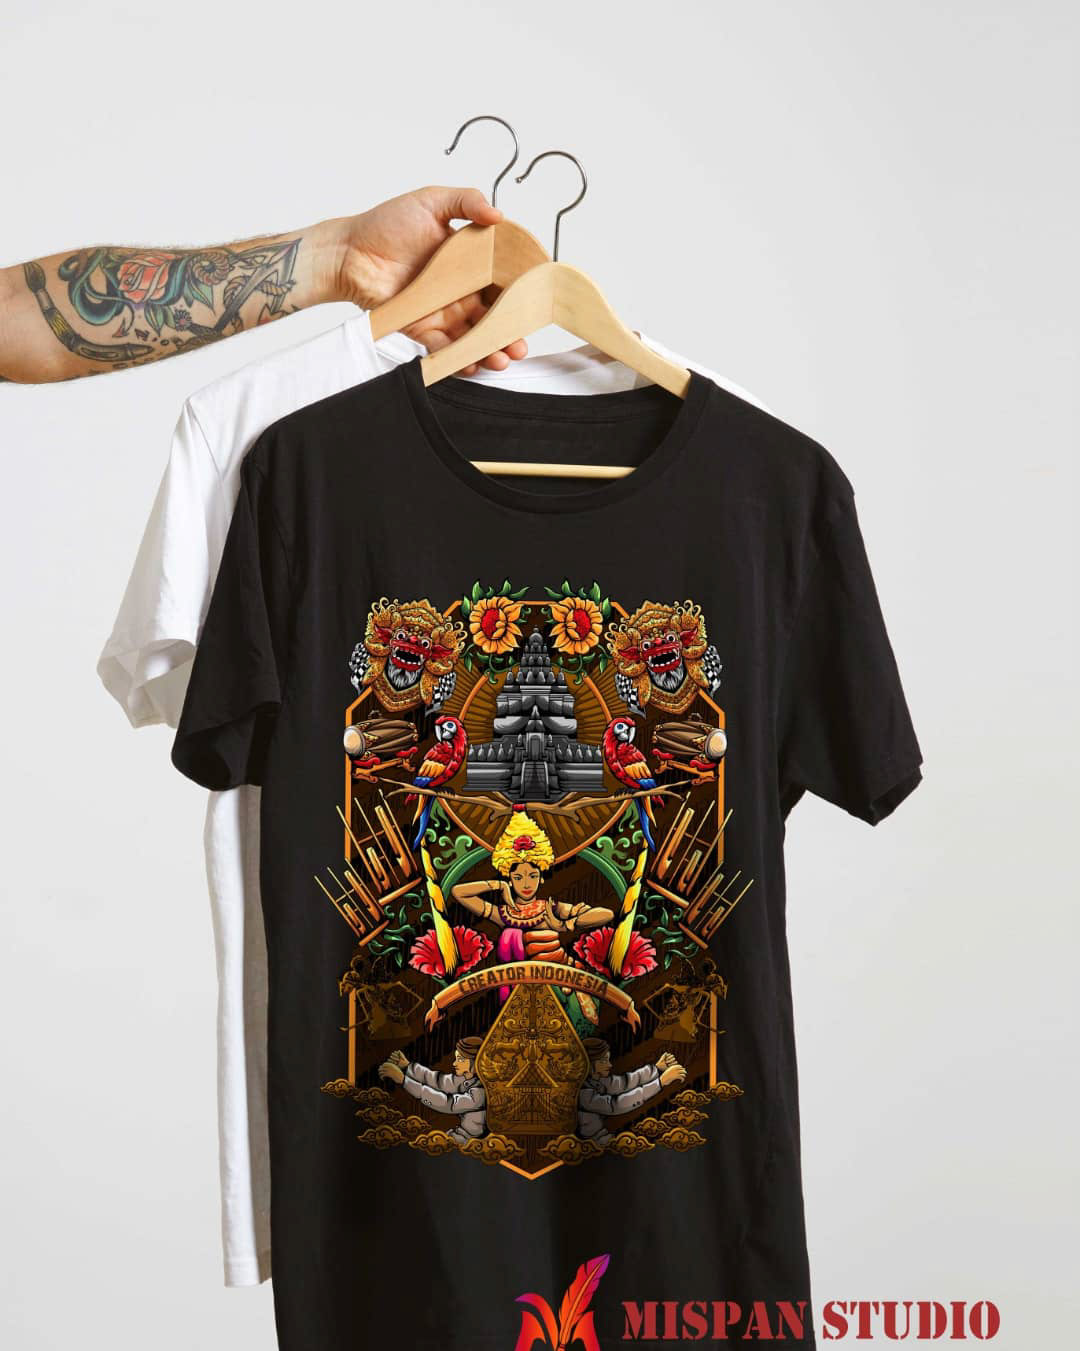 amerika artwork culture Culture Indonesia gatejapanese japan japanese ovp t-shirtfanart Thailand